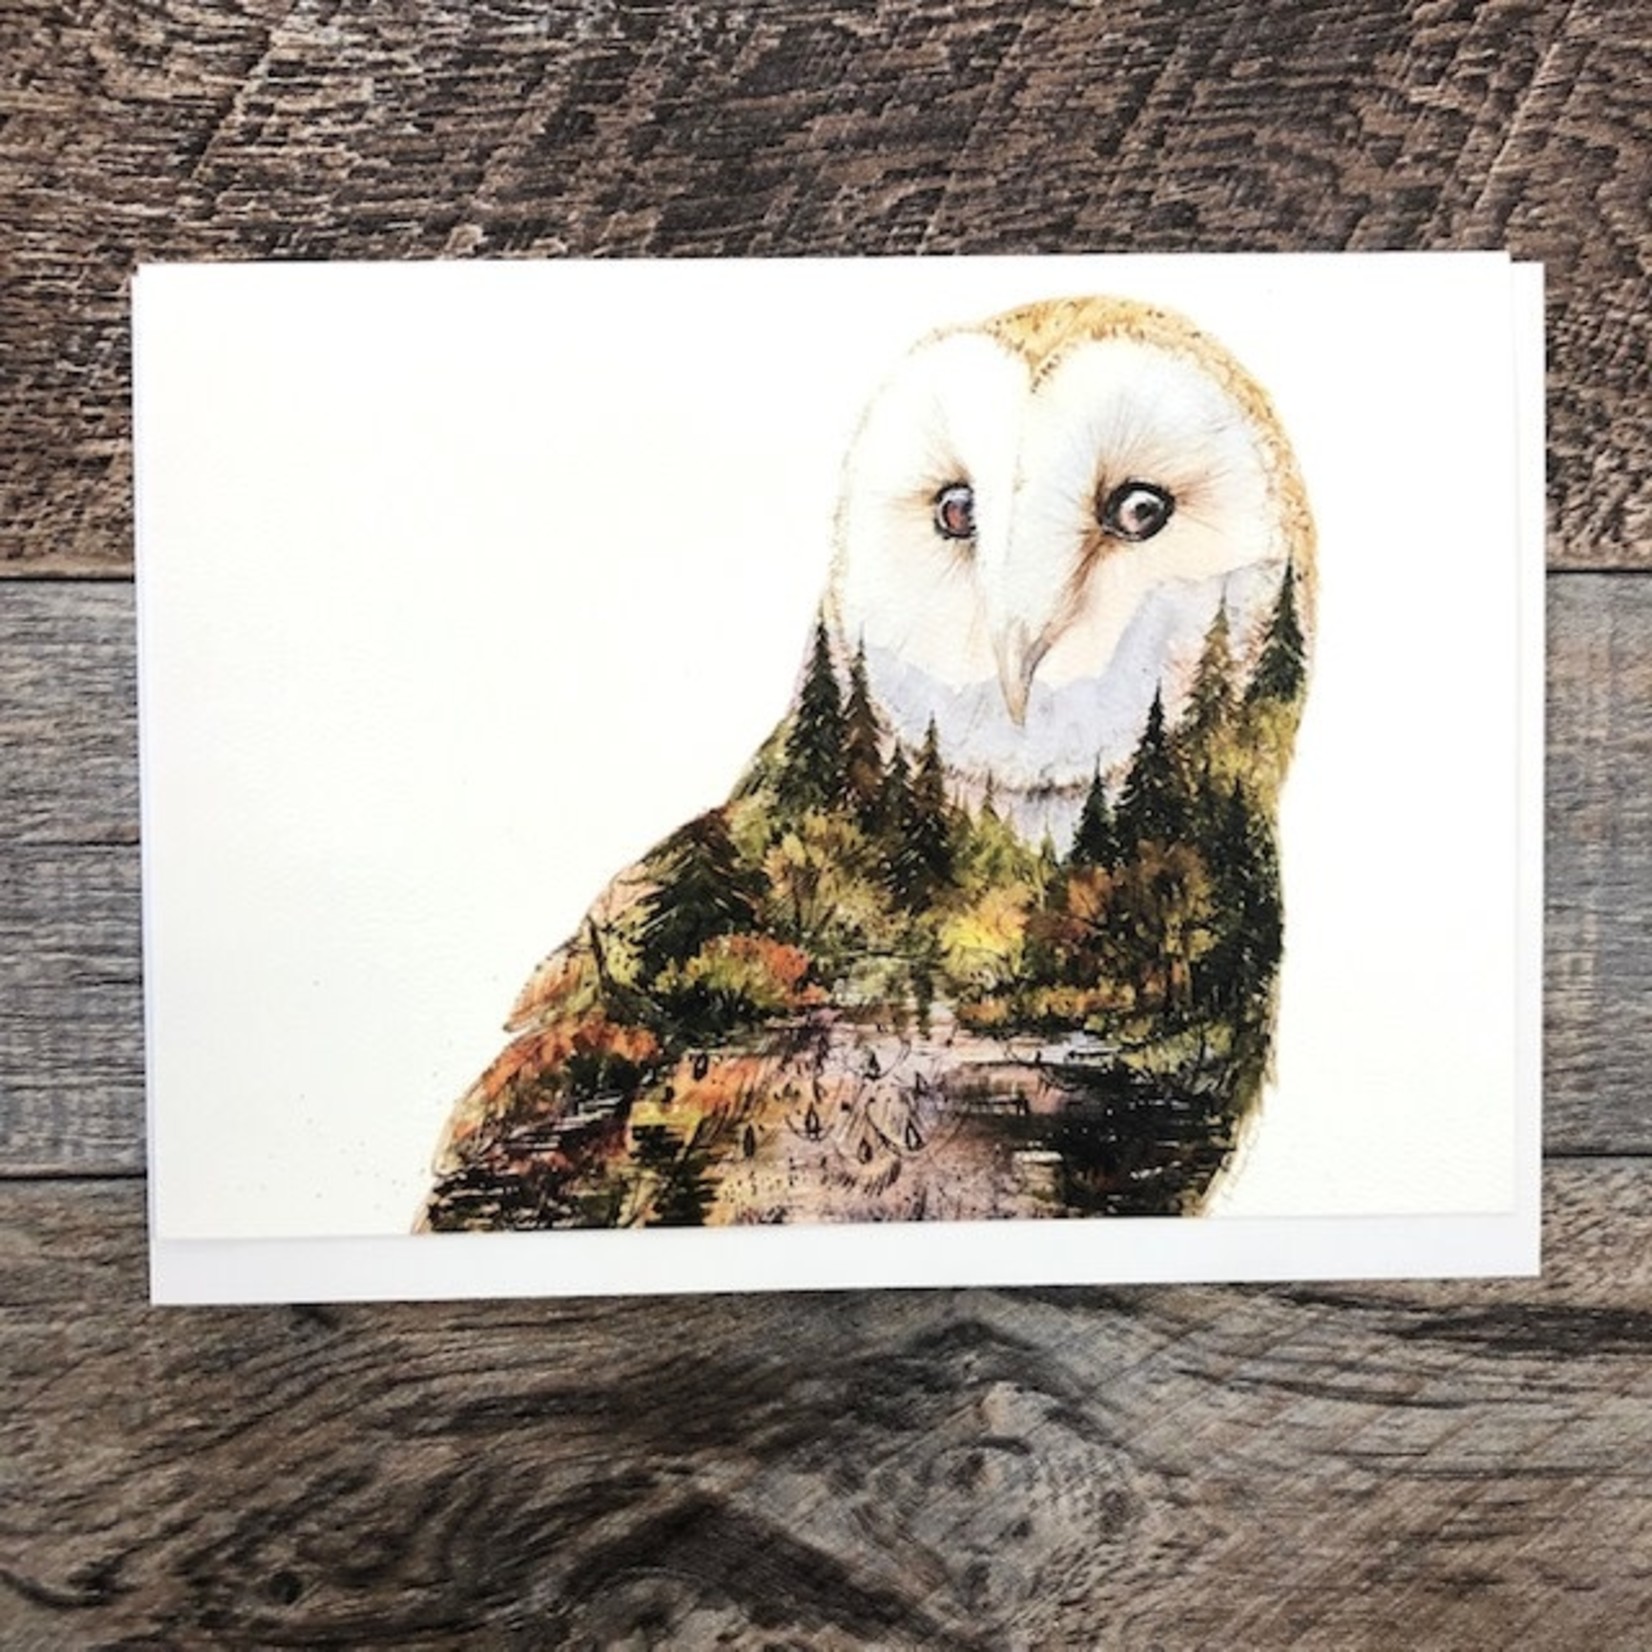 Elena's Watercolour Card - Soul Light Barn Owl Fall Forest